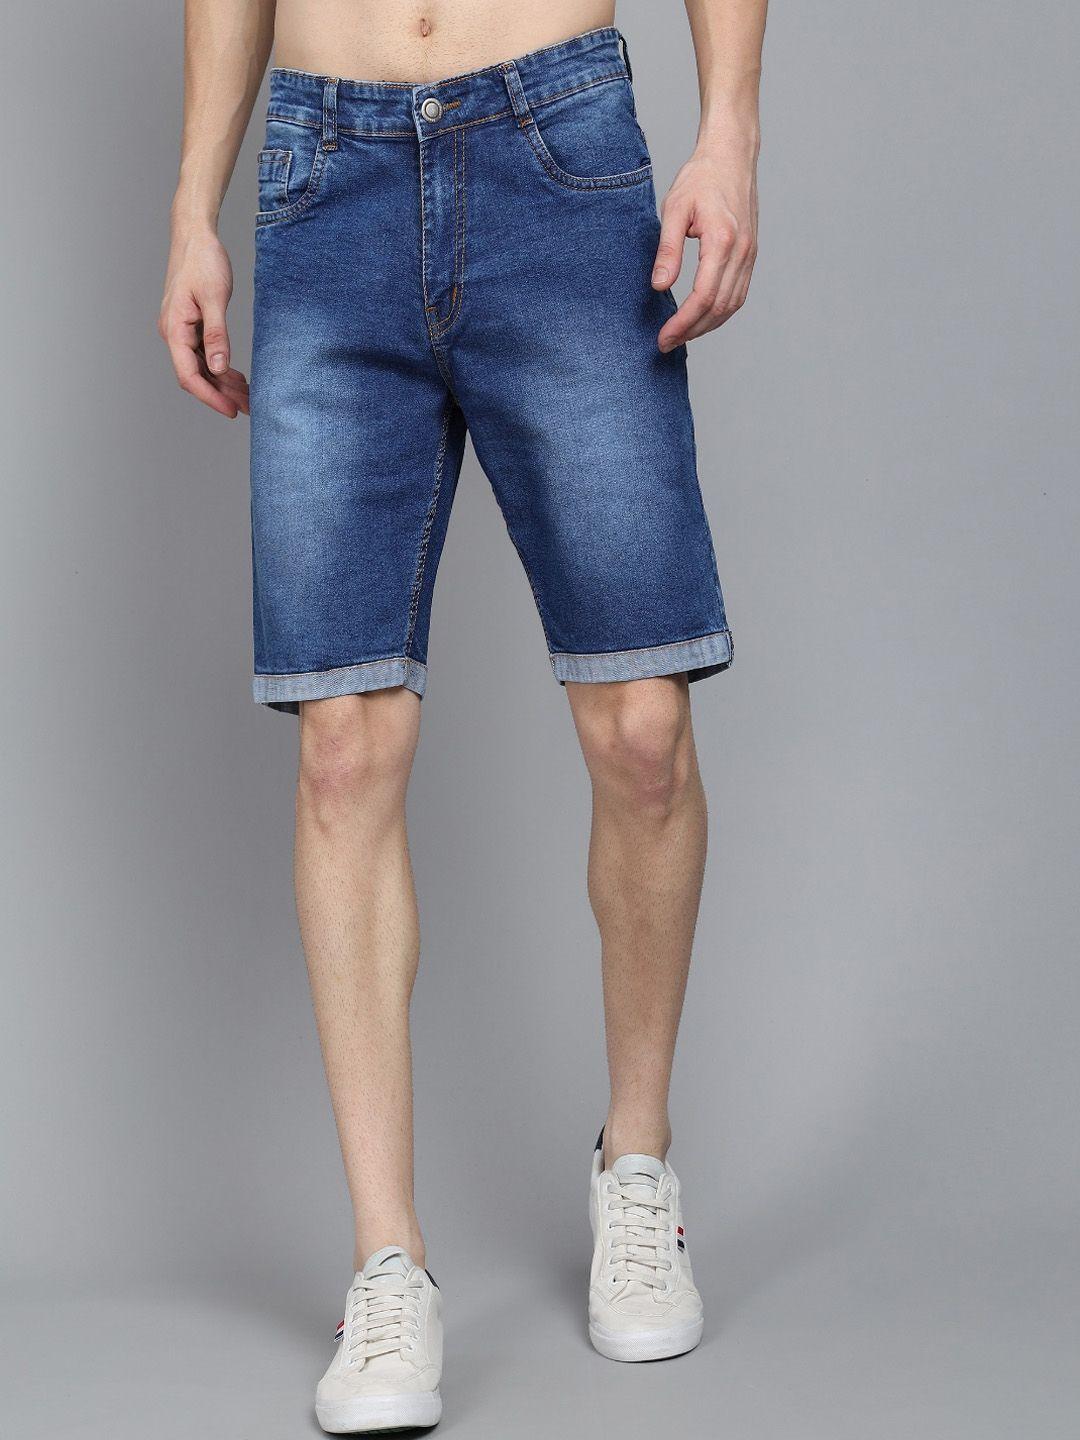 studio-nexx-men-blue-washed-denim-denim-shorts-technology